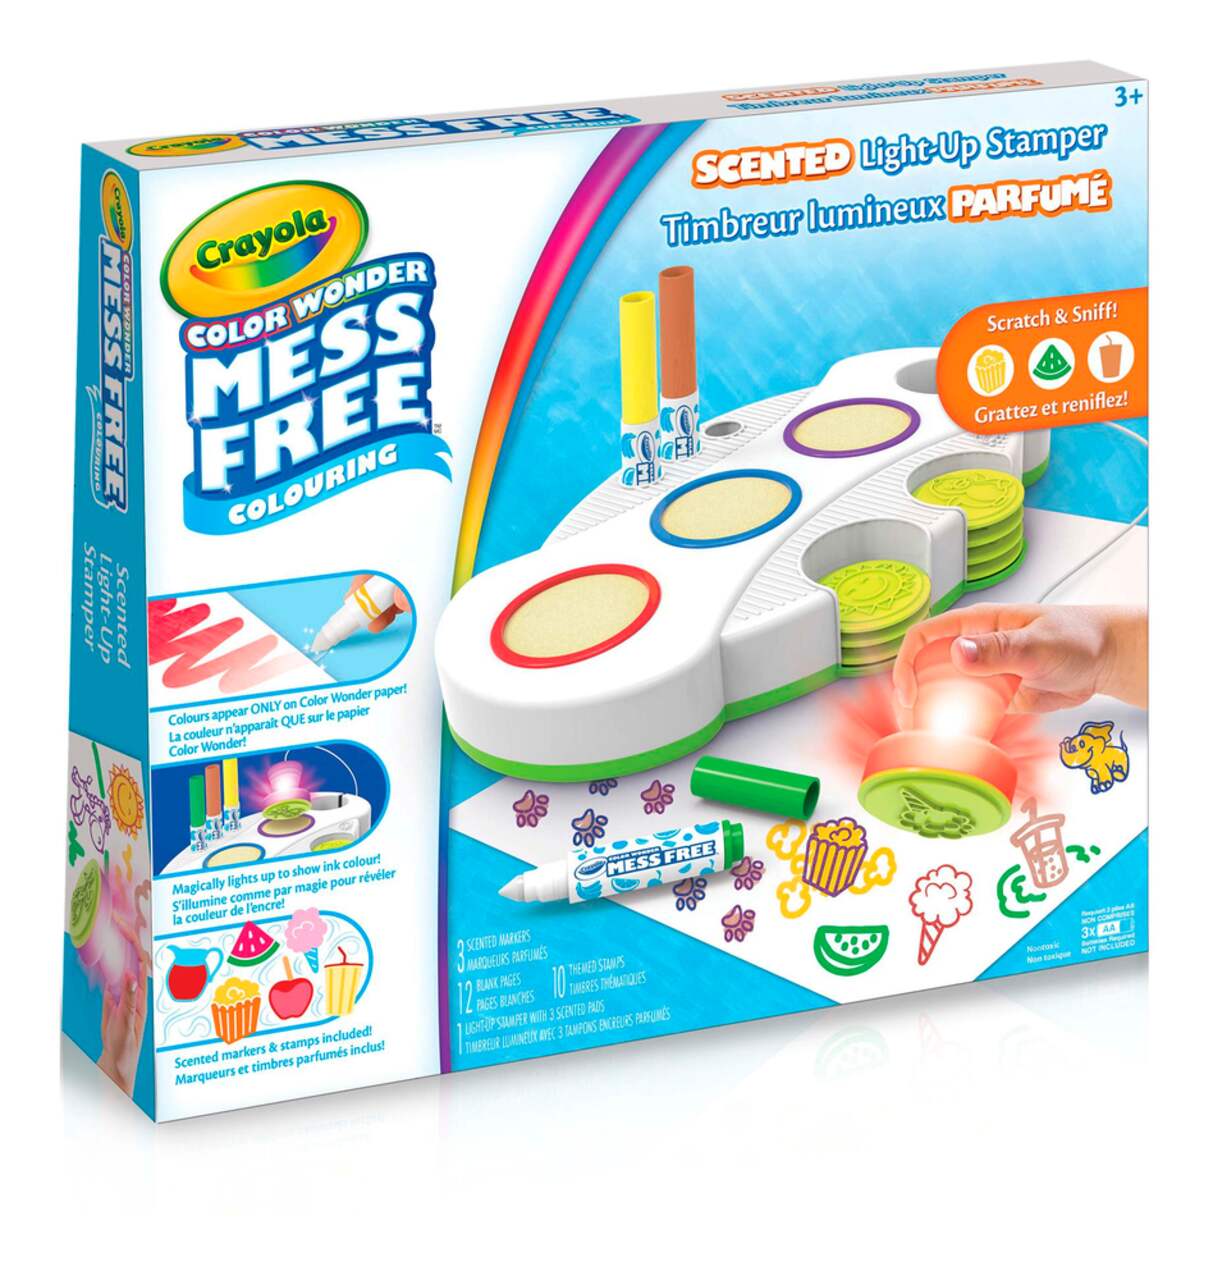 Crayola Color Wonder Mess Free™ Magic Light Brush Coloring Set, 1